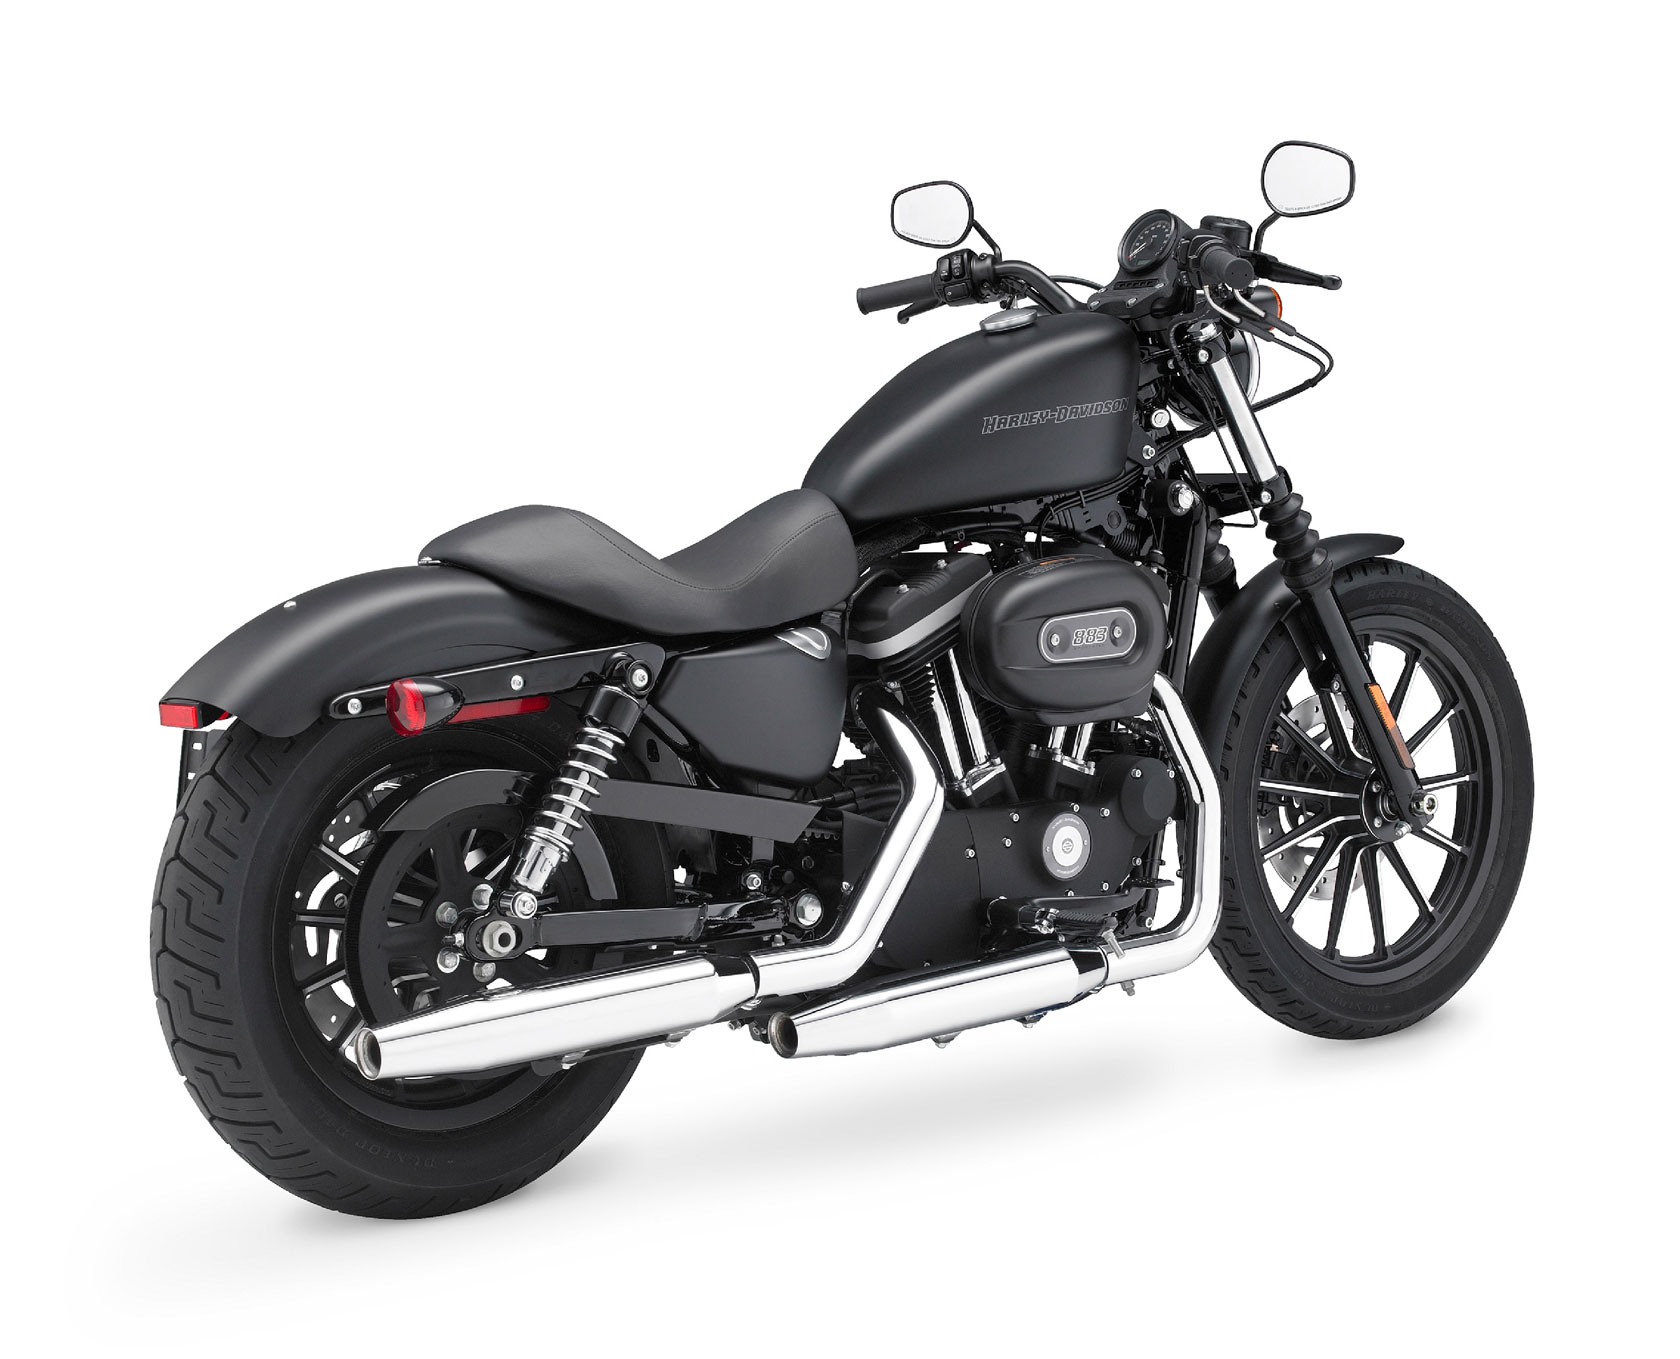 Harley Davidson Harley Davidson Sportster 883 Moto Zombdrive Com